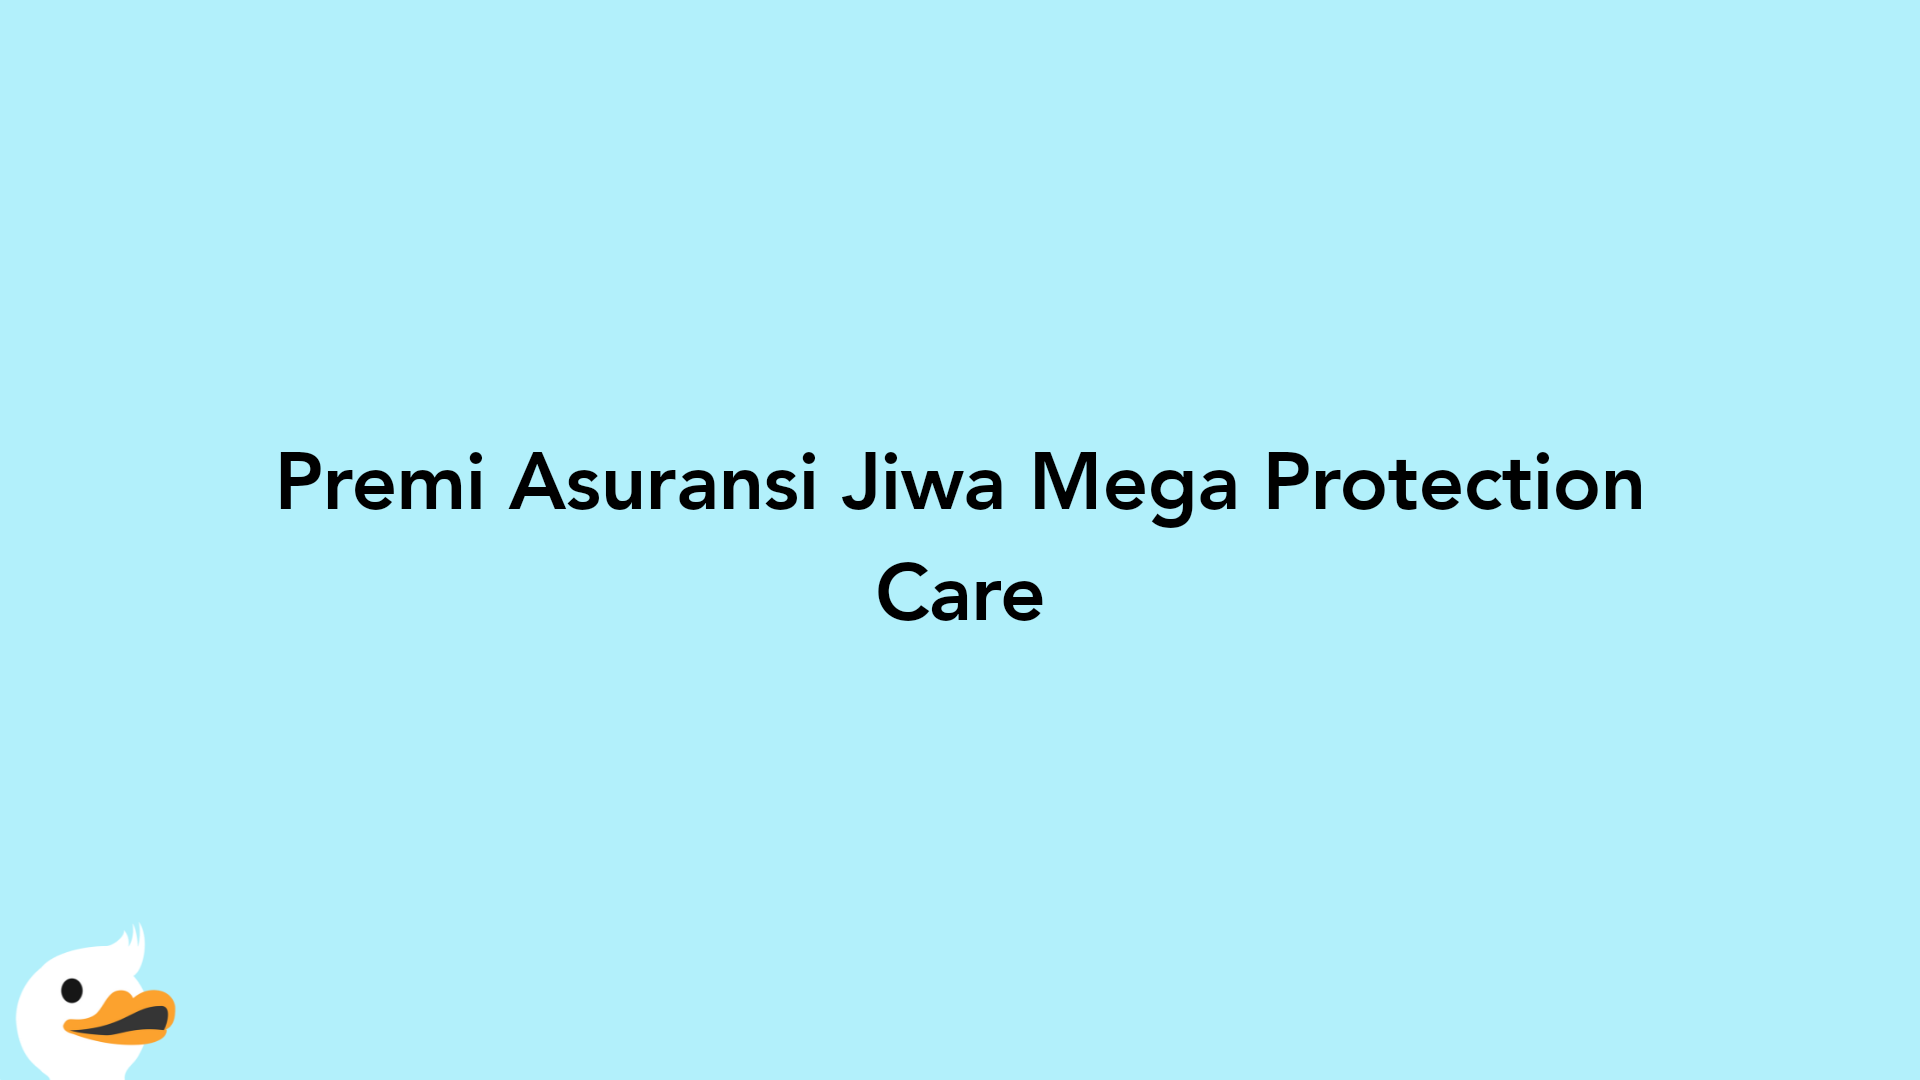 Premi Asuransi Jiwa Mega Protection Care